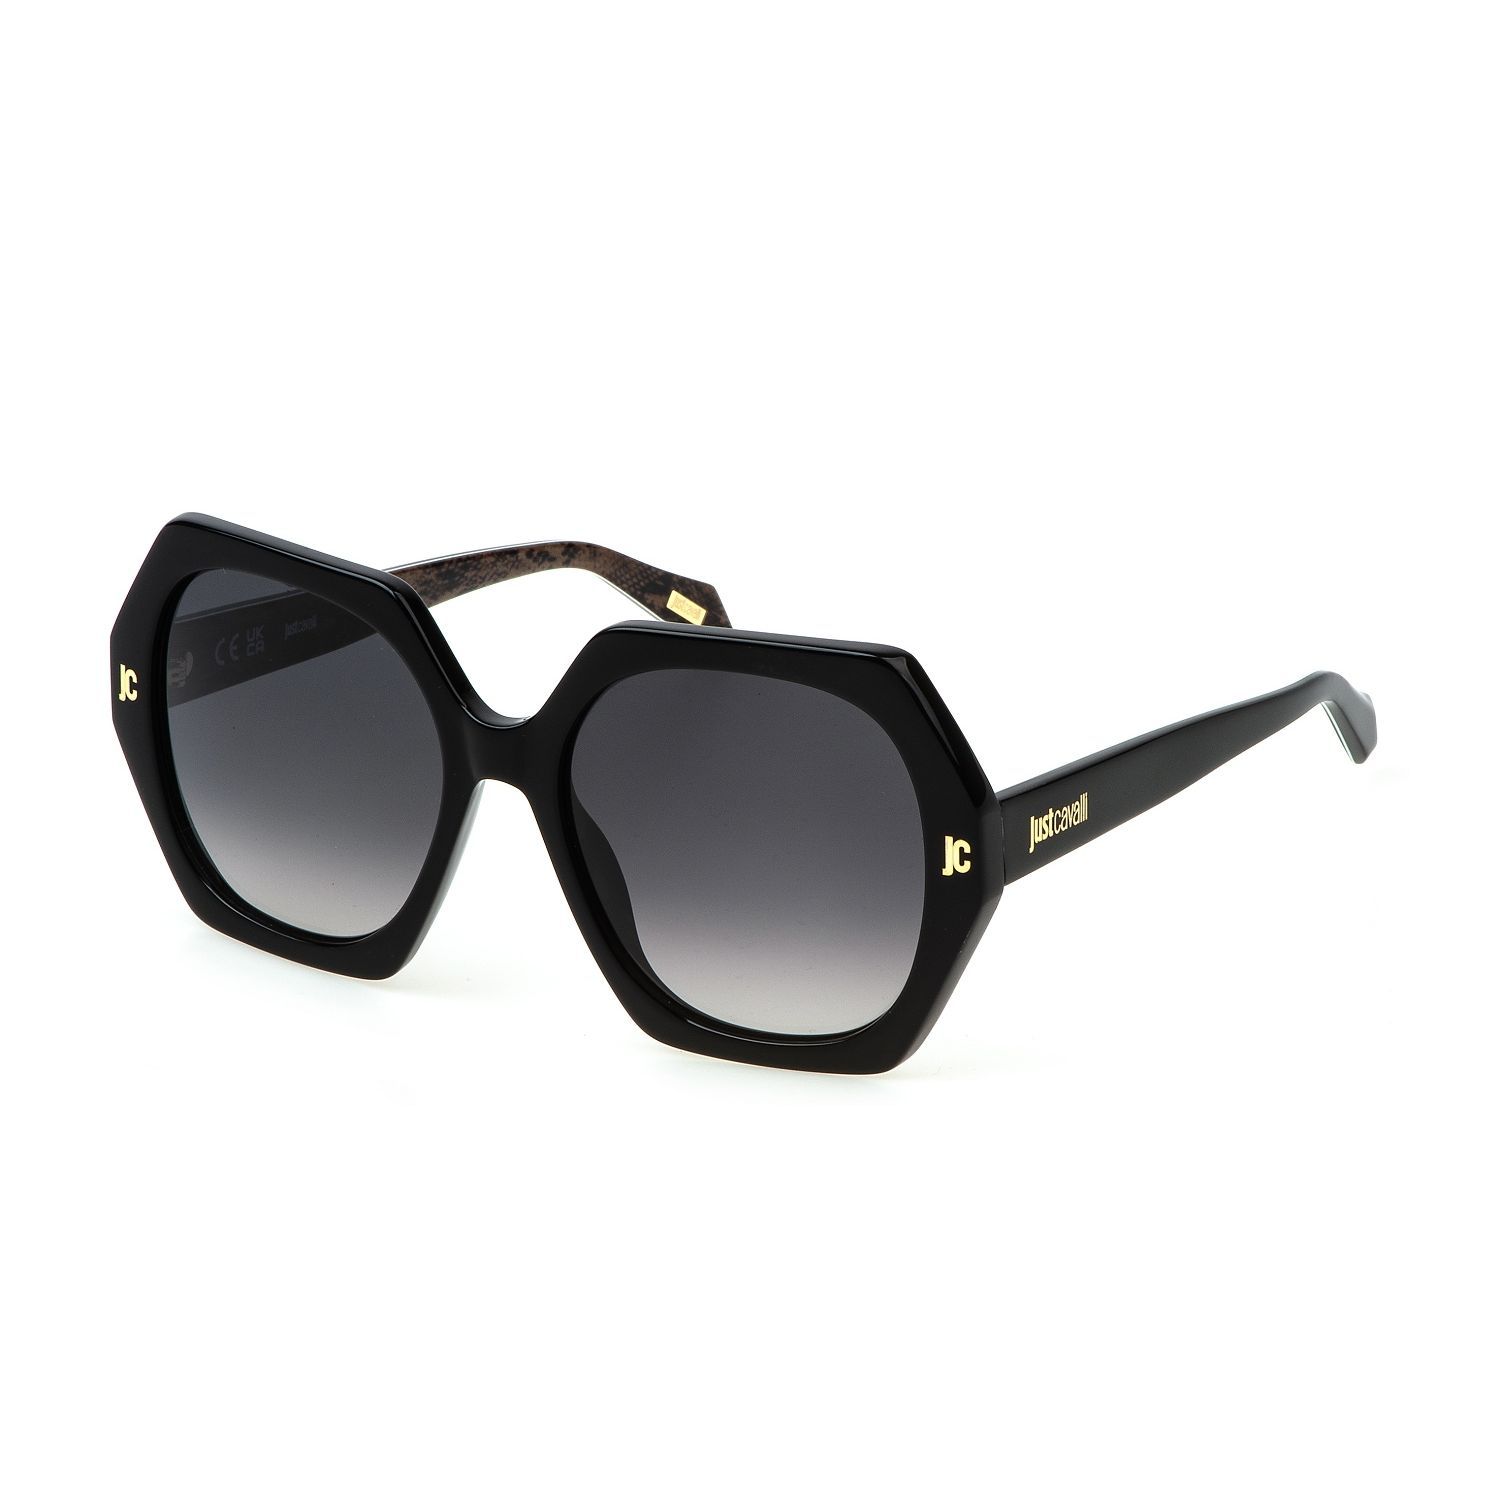 SJC087 Geometric Sunglasses 0700 - size 56